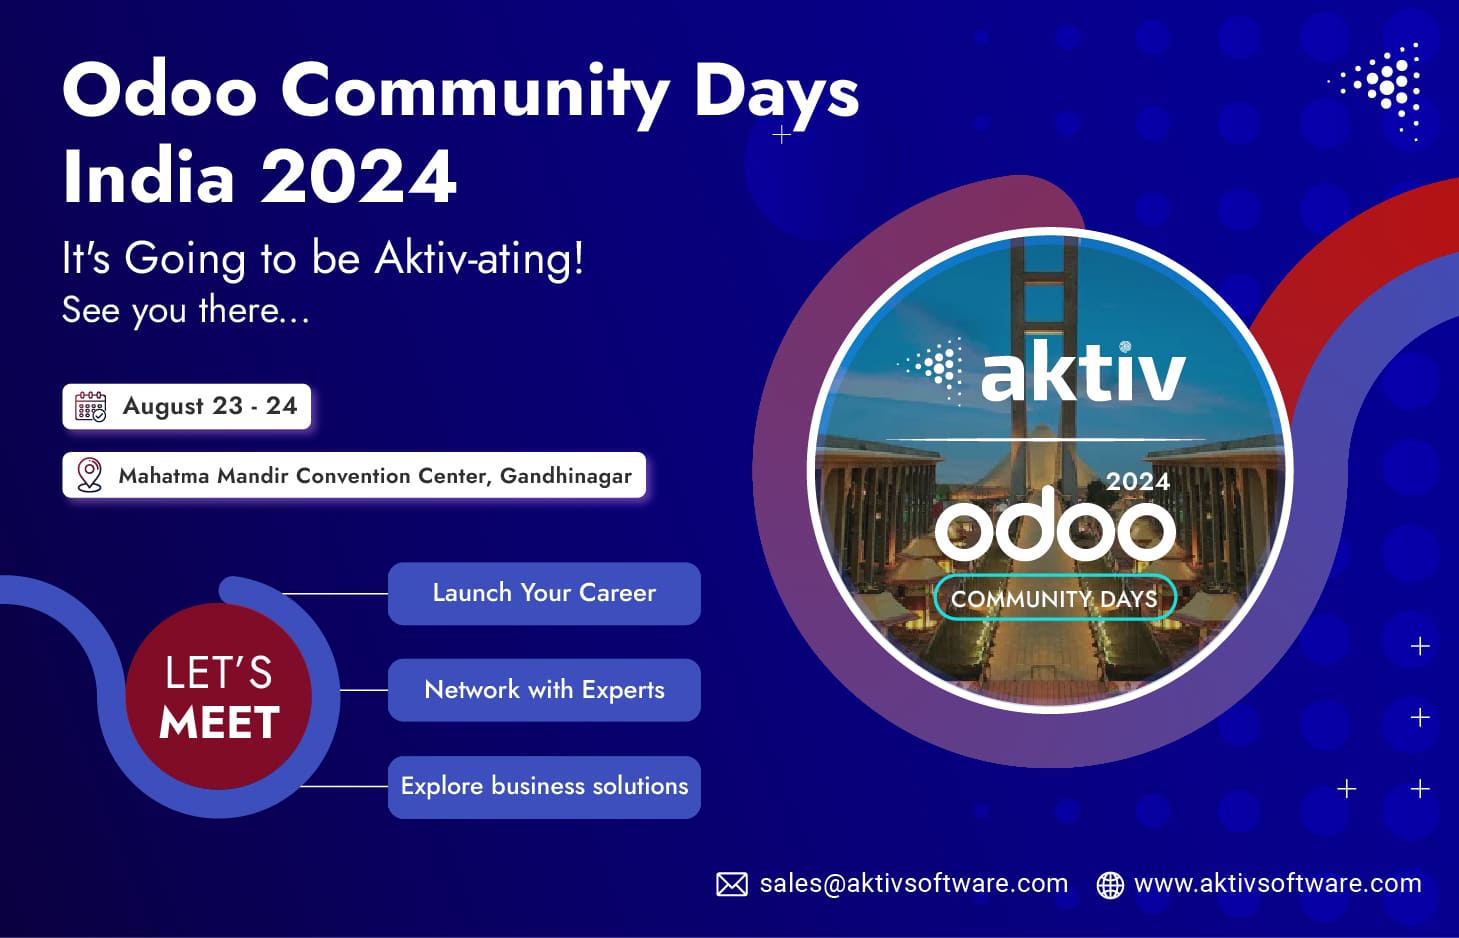 Meet Aktiv at Odoo Community Days India 2024